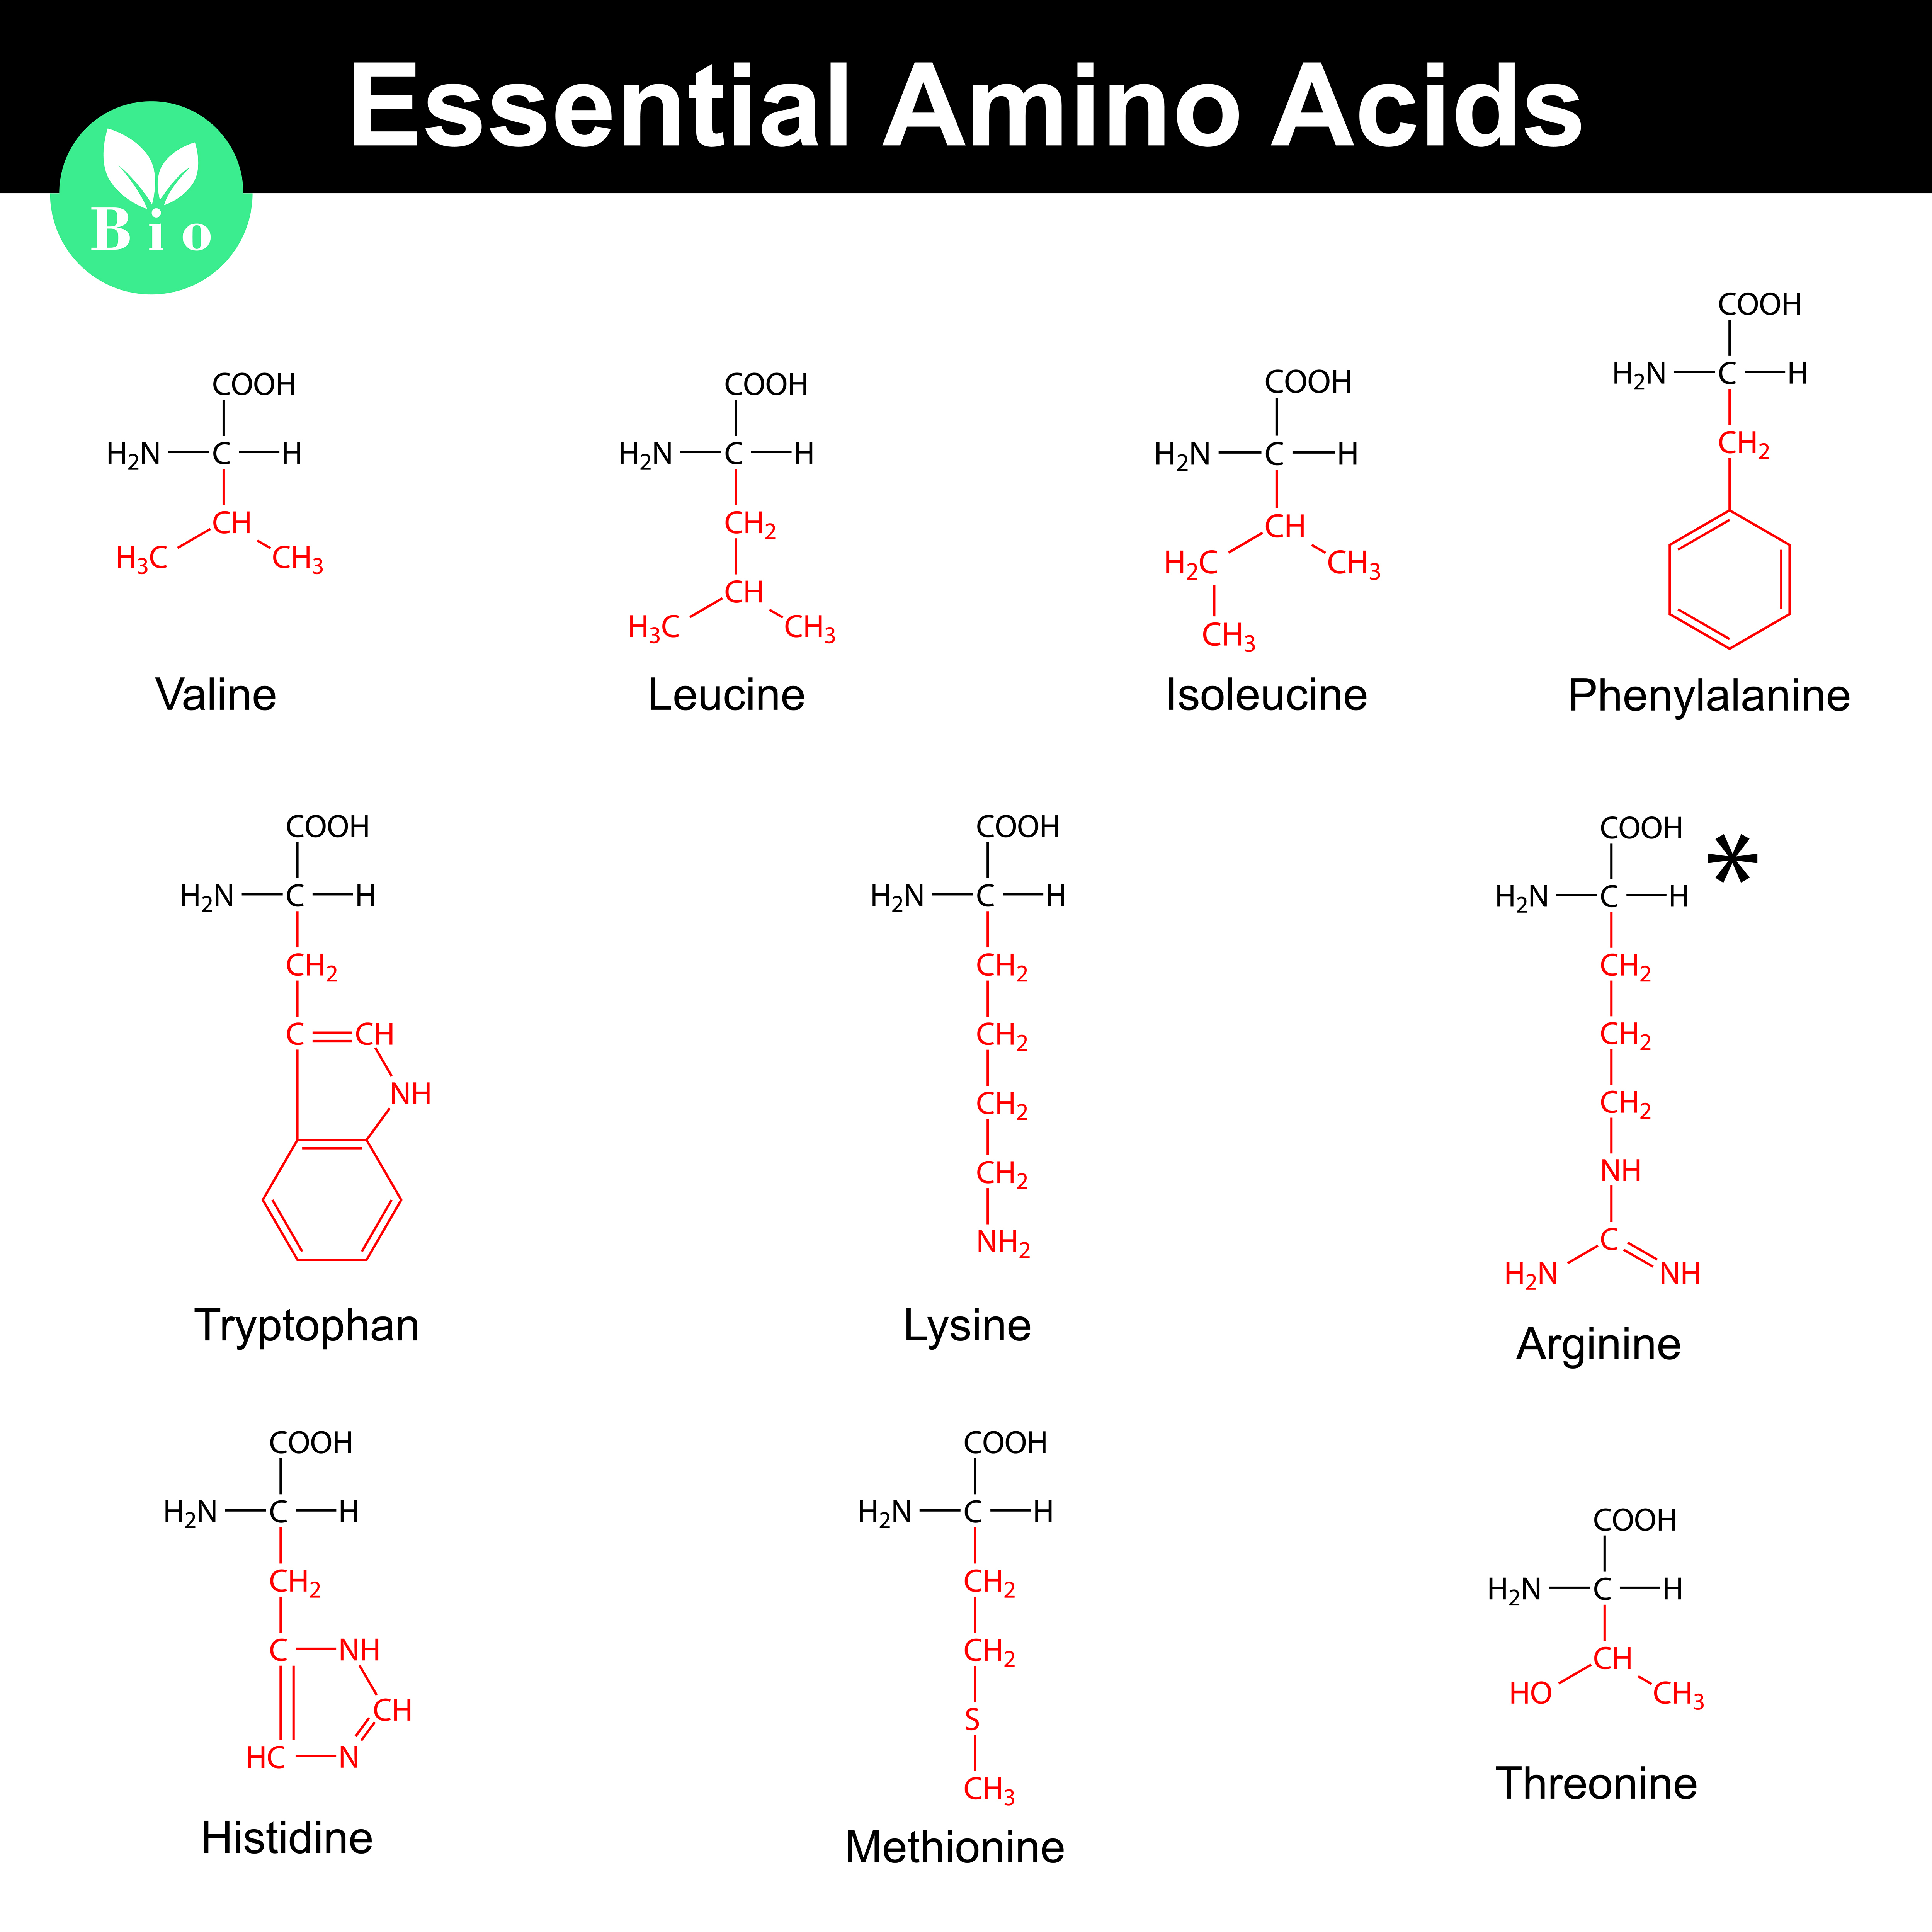 amino acids presentation